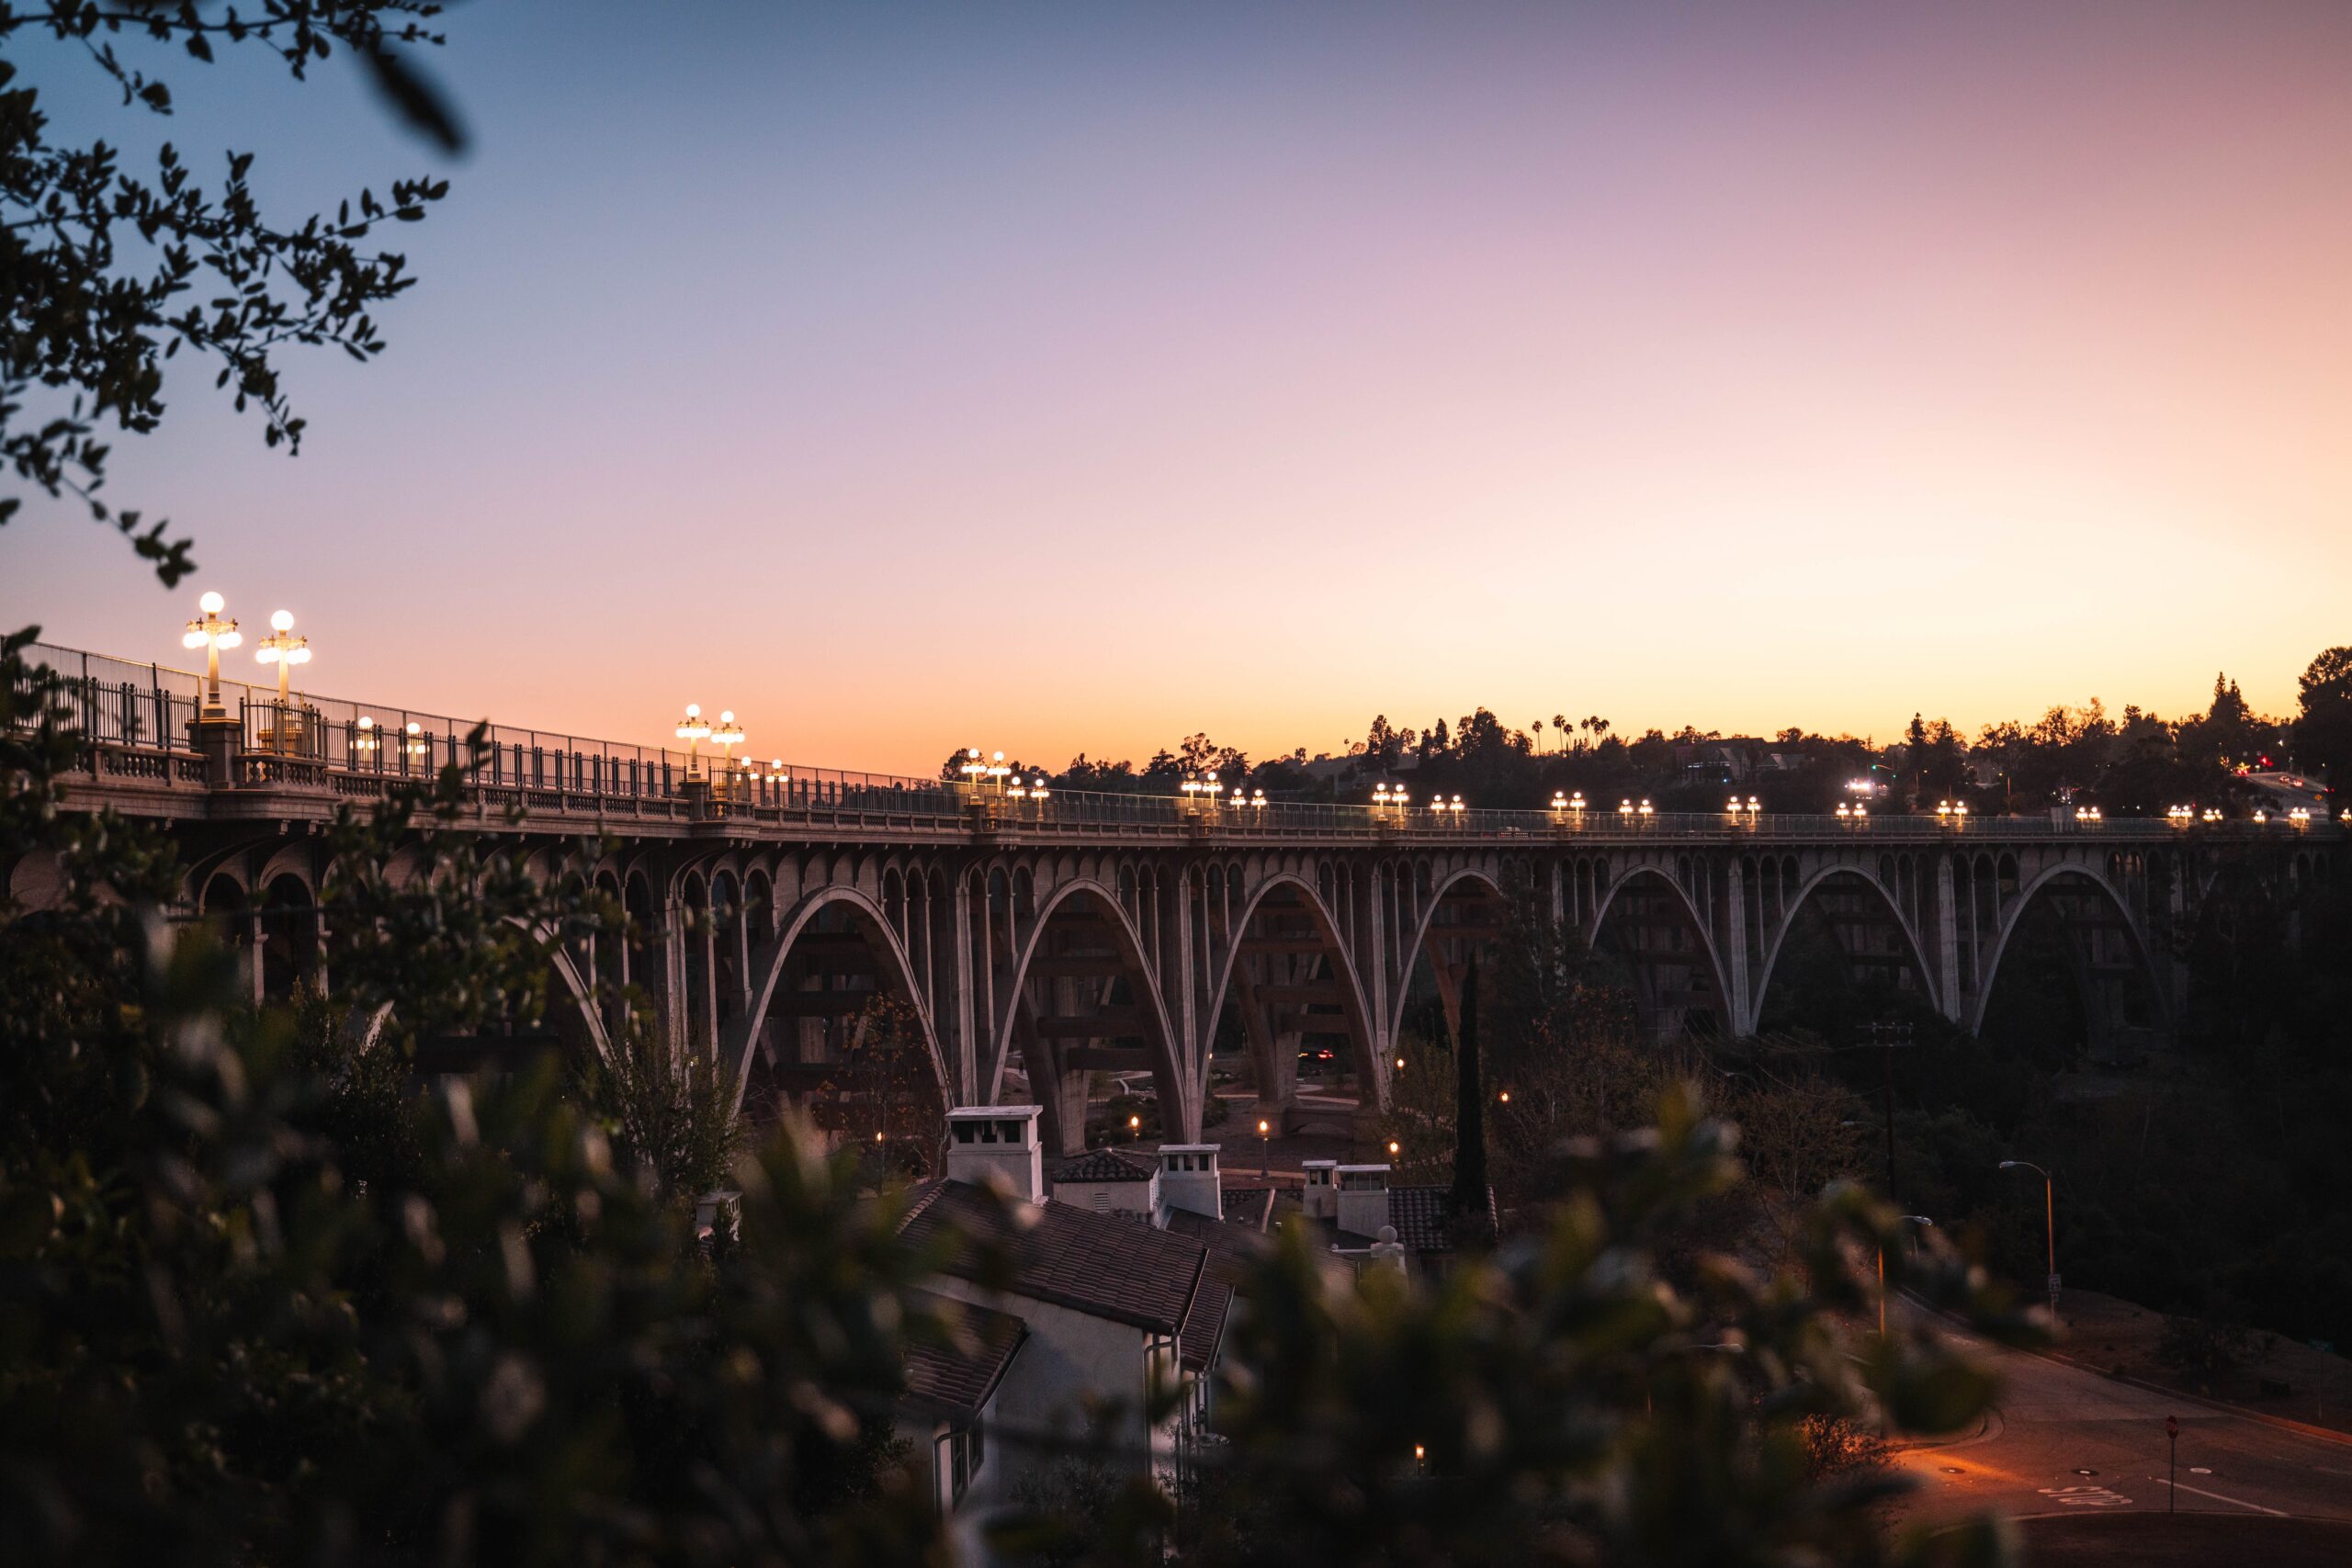 Pasadena bridge at dusk